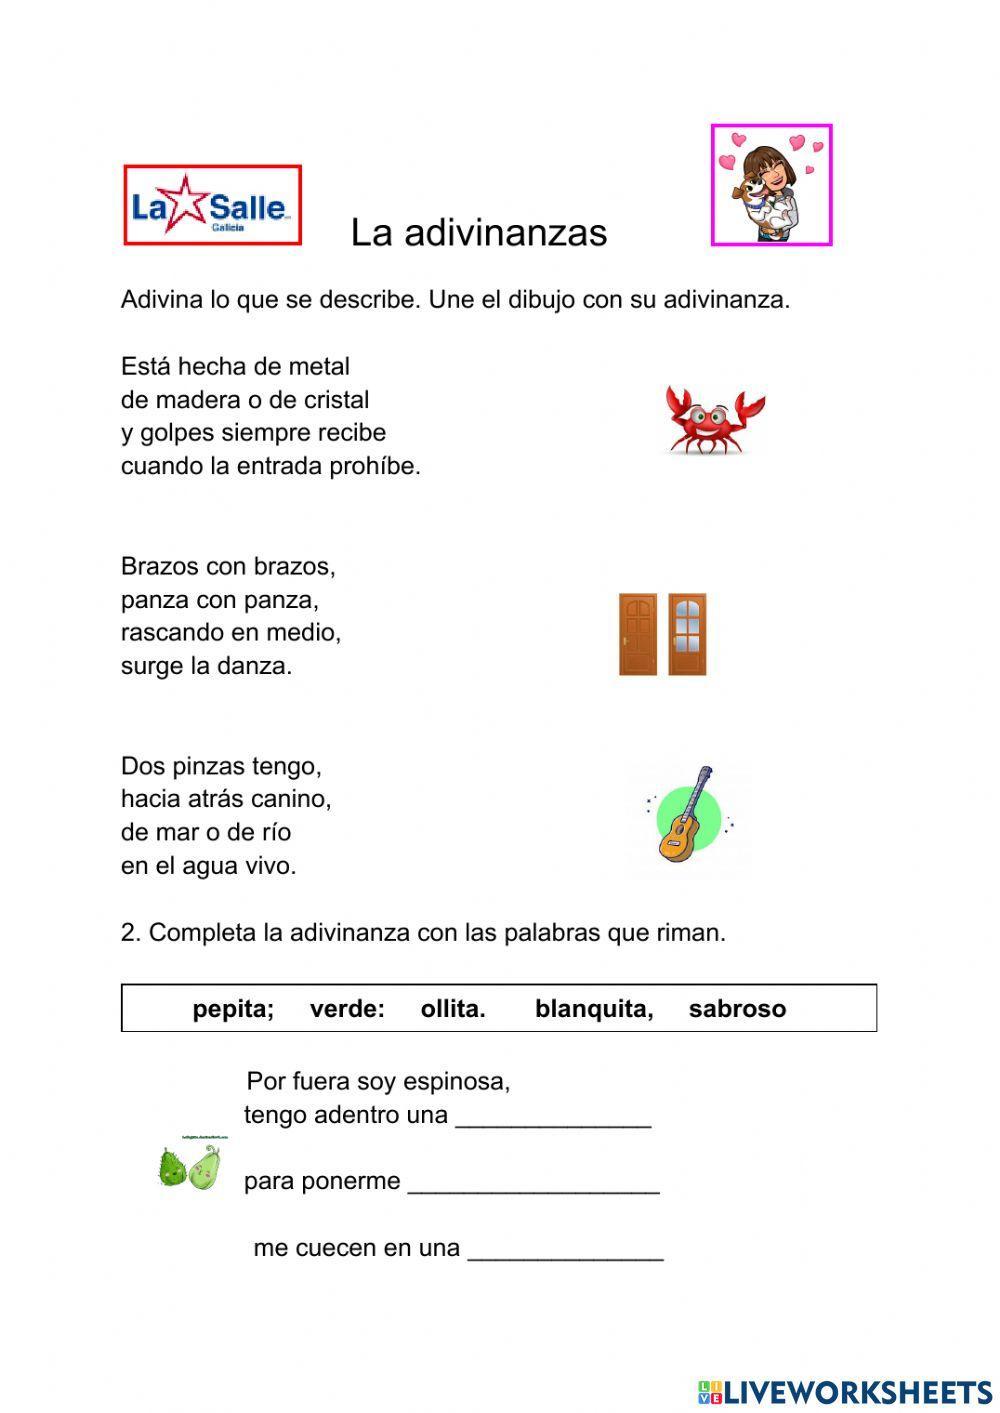 Adivinanzas worksheet for Tercero de Primaria | Live Worksheets